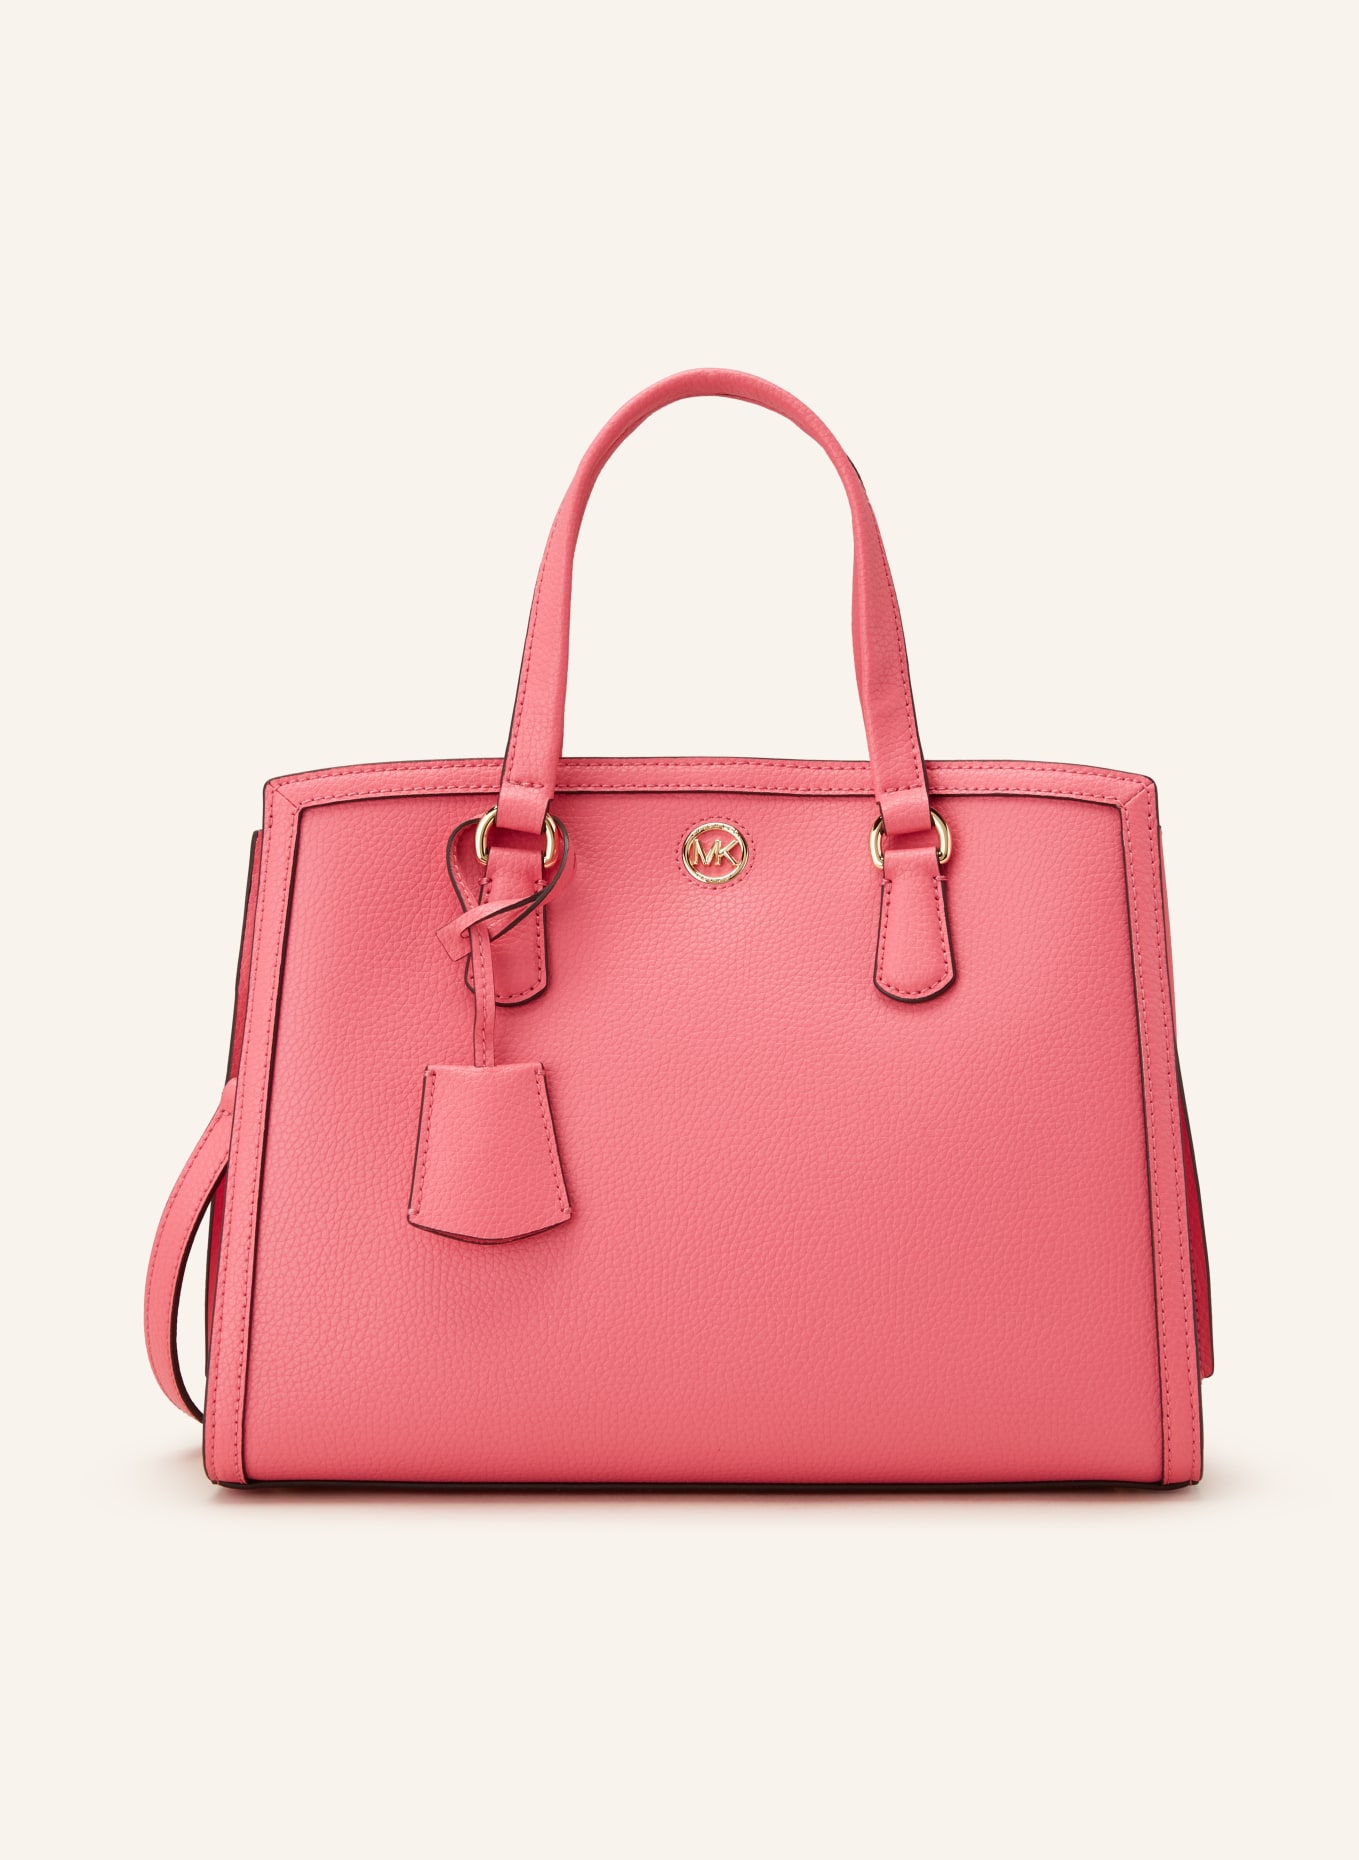 MICHAEL KORS Handtasche CHANTAL, Farbe: 667 CAMILA ROSE (Bild 1)